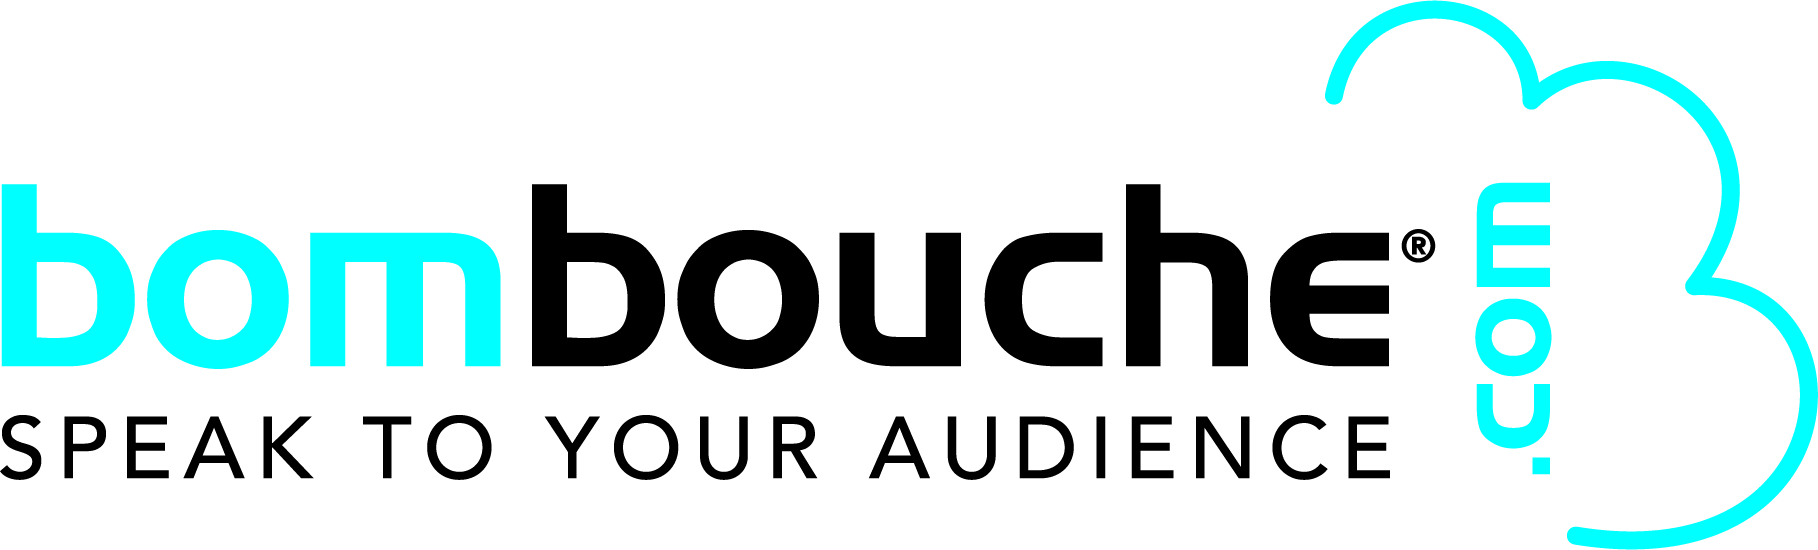 Bombouche_Logo 2018 Print Version.jpg